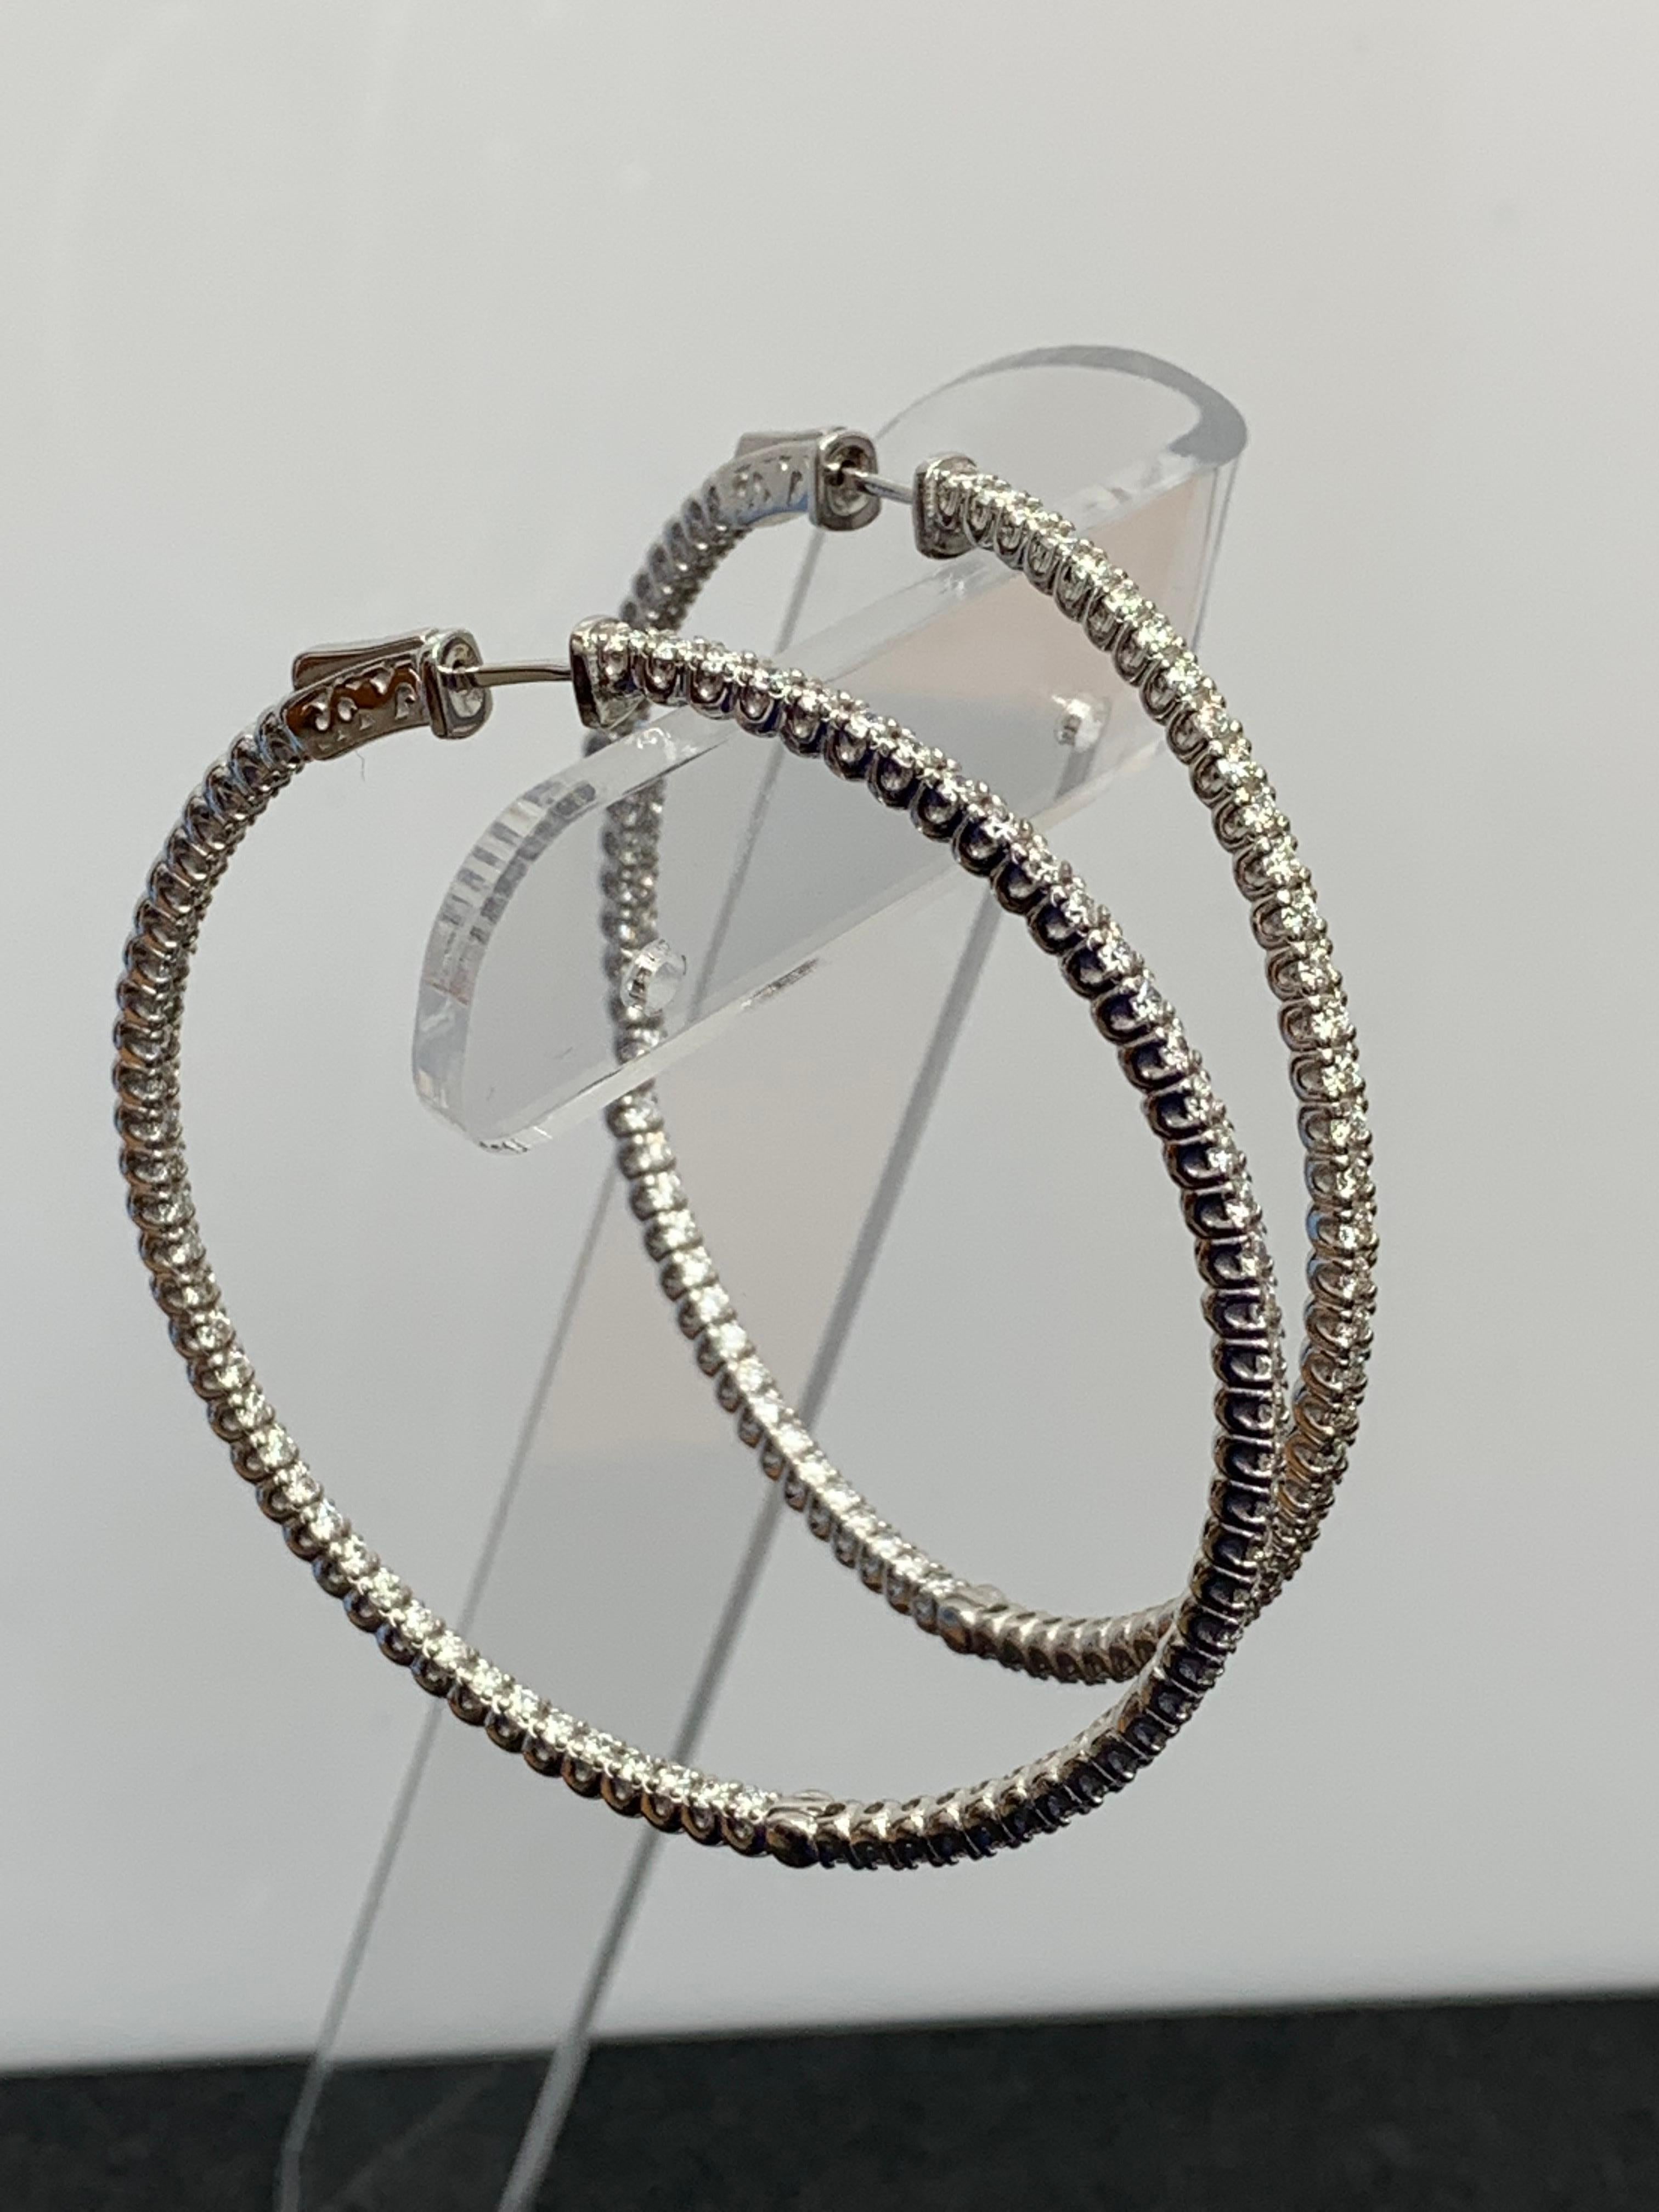 3.01 Carat Round Cut Diamond Hoop Earrings in 14k White Gold For Sale 1